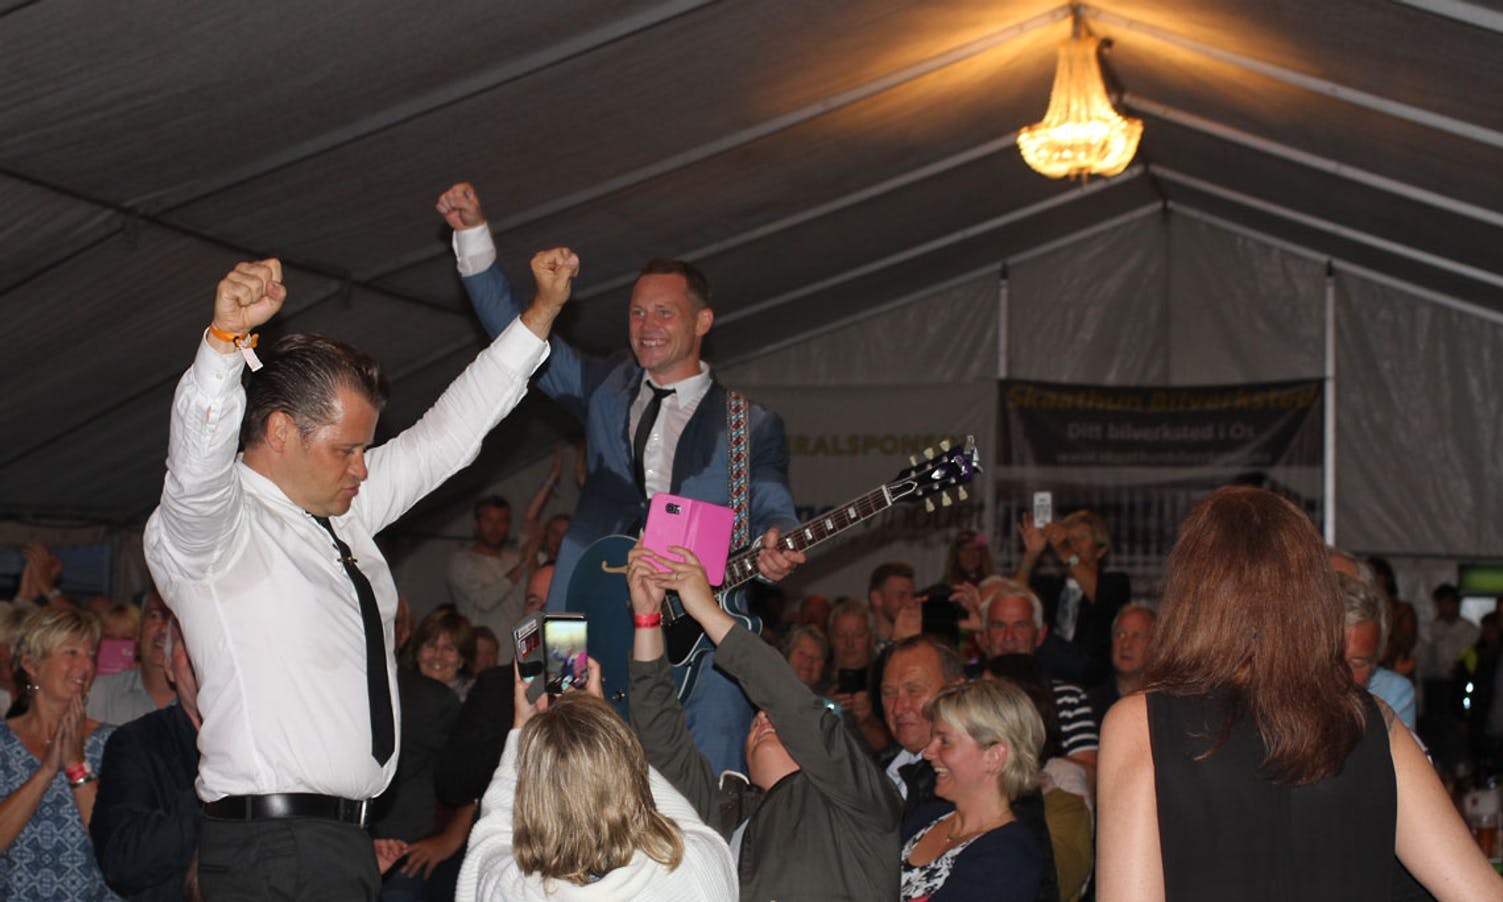 Heine Totland dansa på bordet (foto: Andris Hamre)